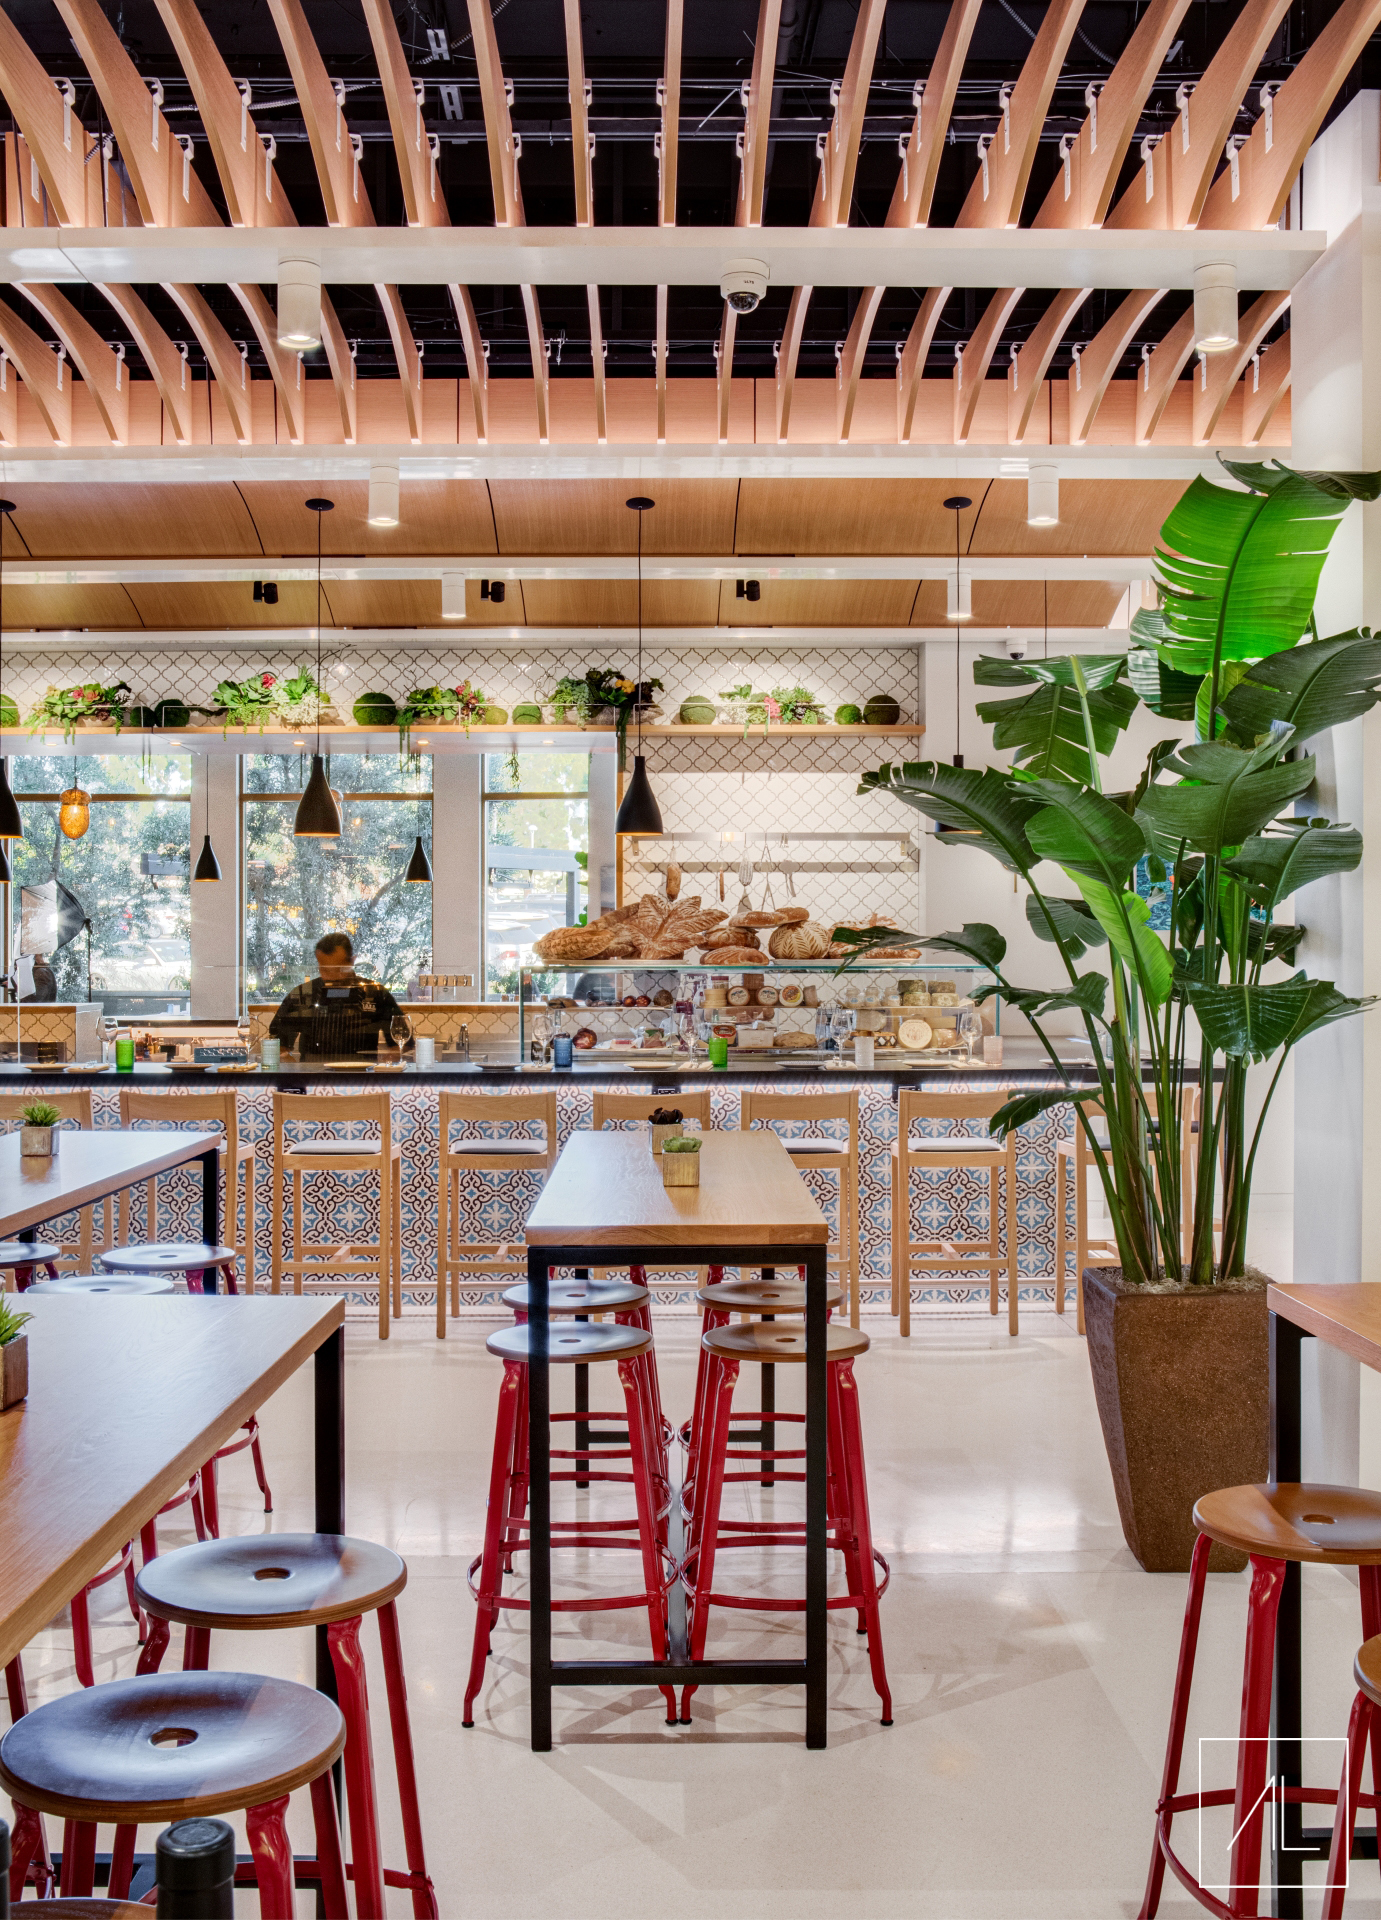 The Hall: Global Eatery has opened its - South Coast Plaza